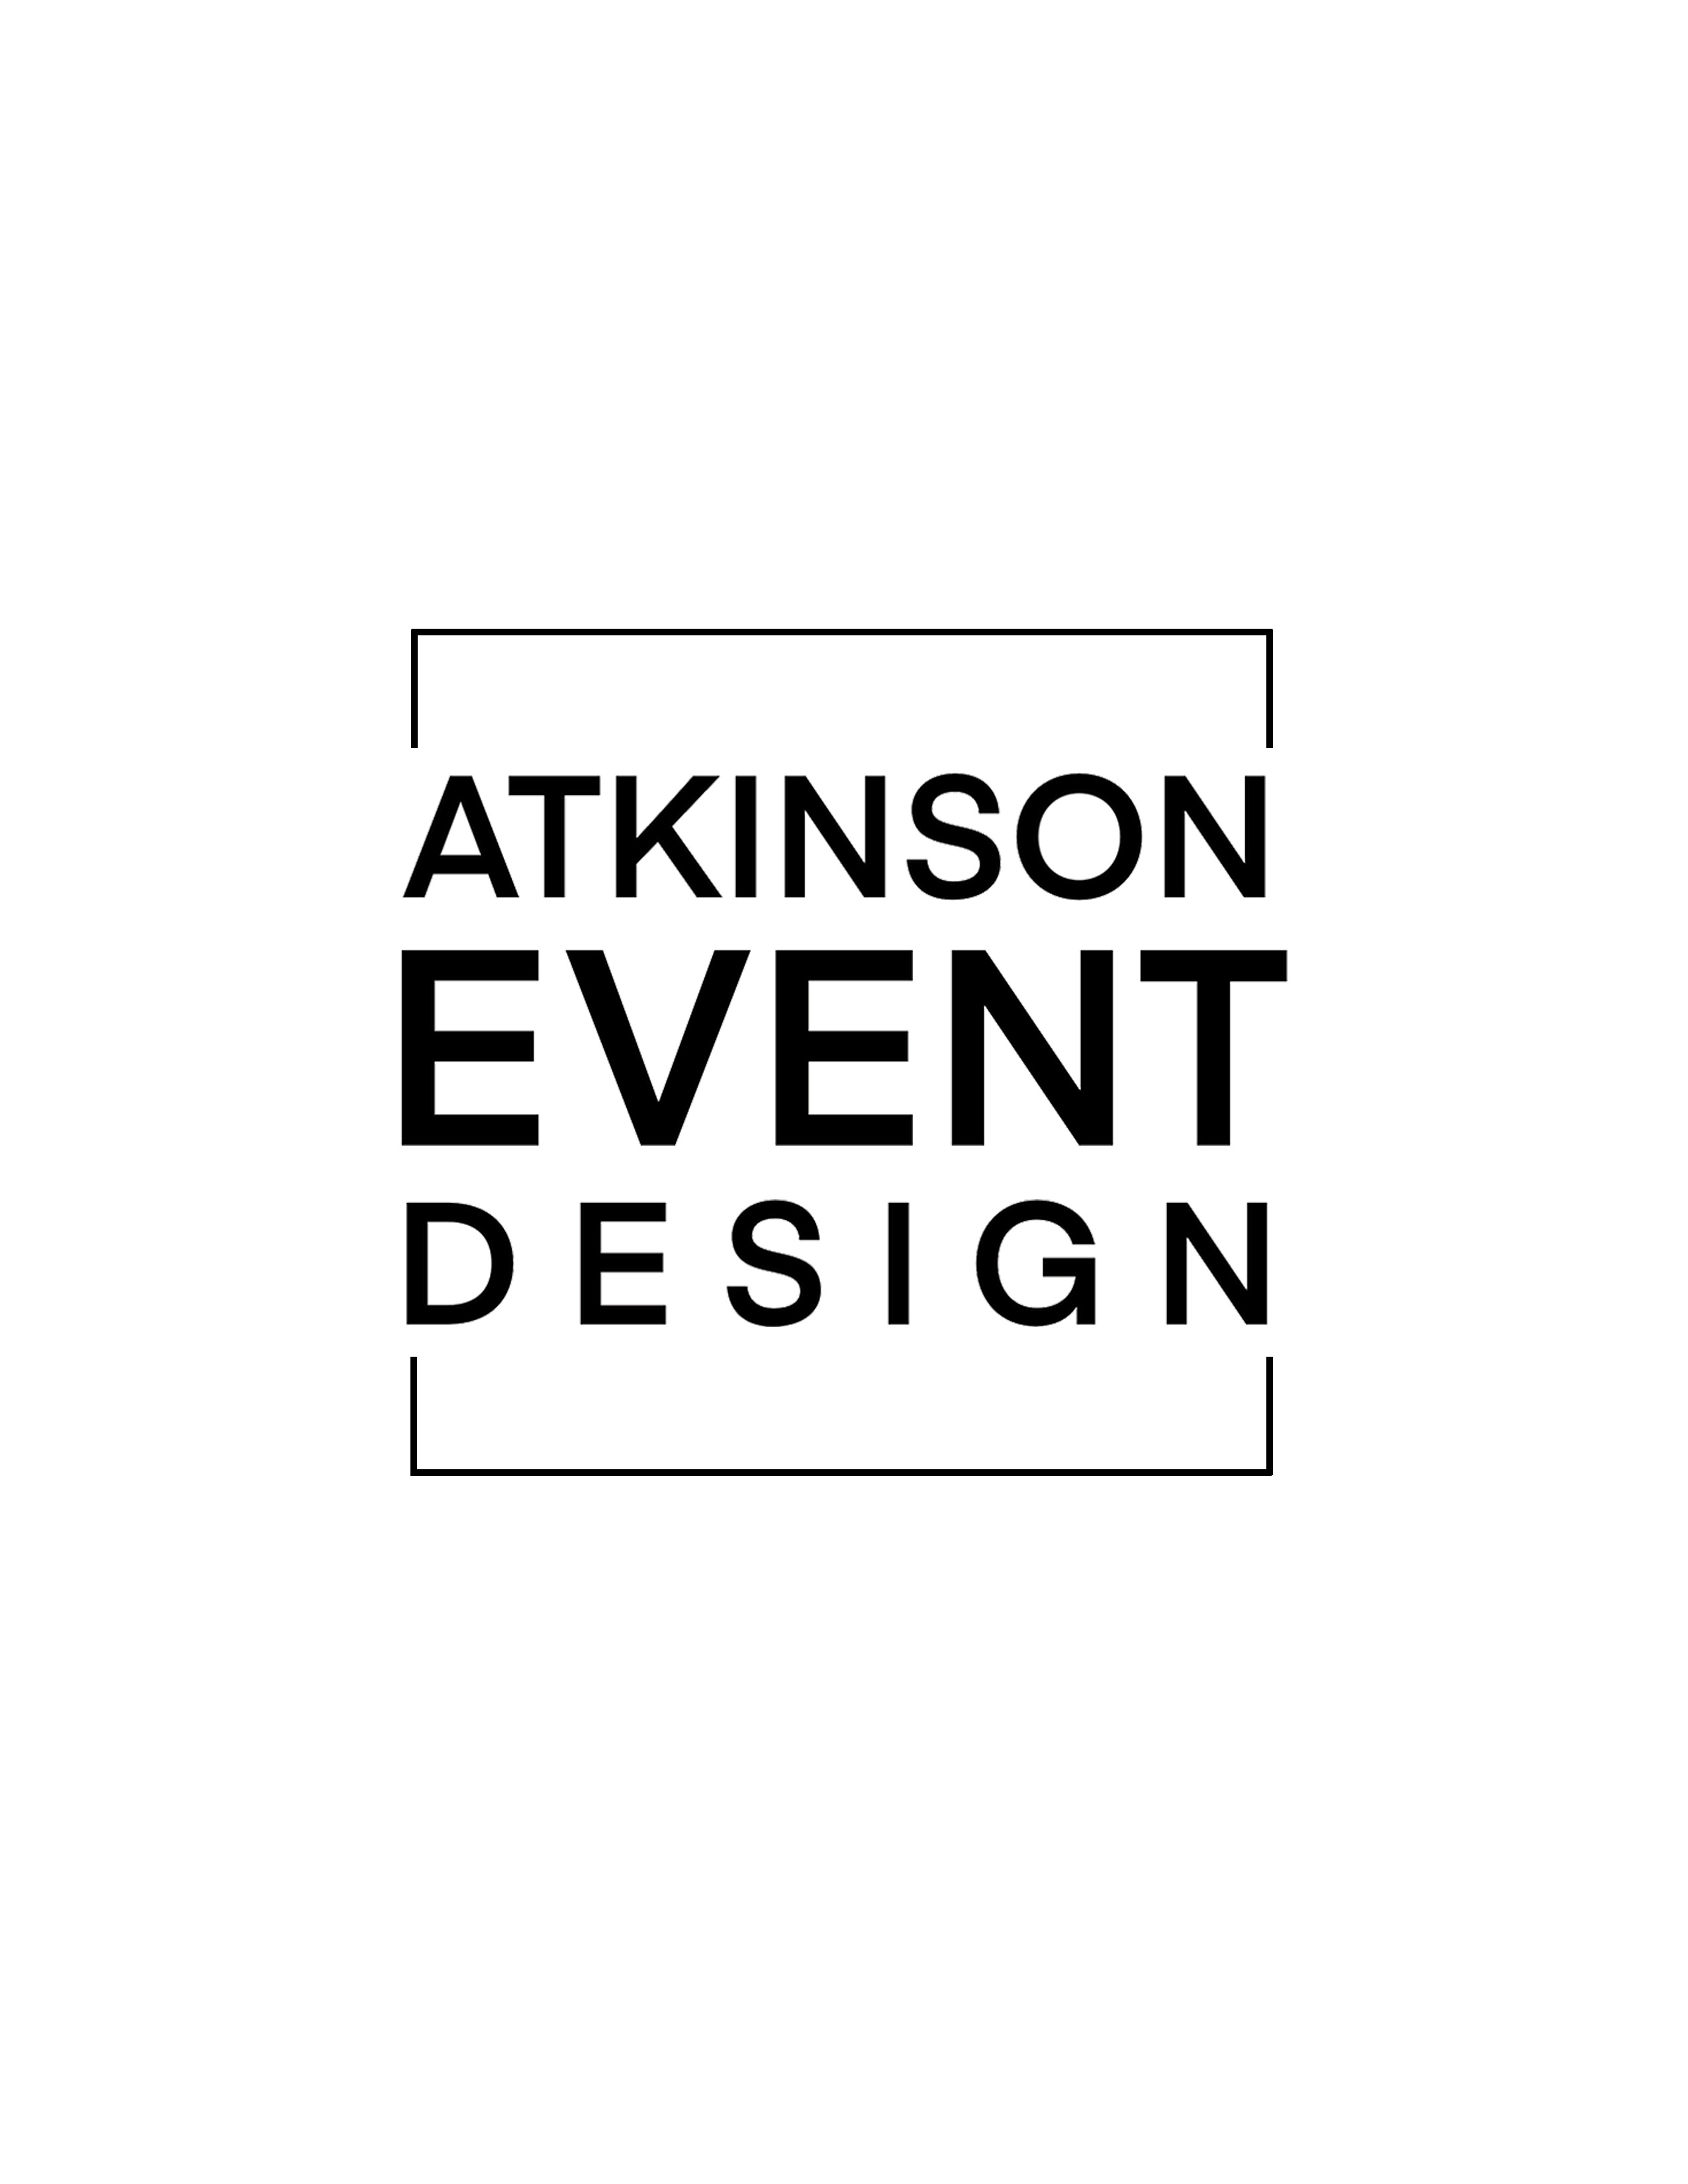 Atkinson Event Design